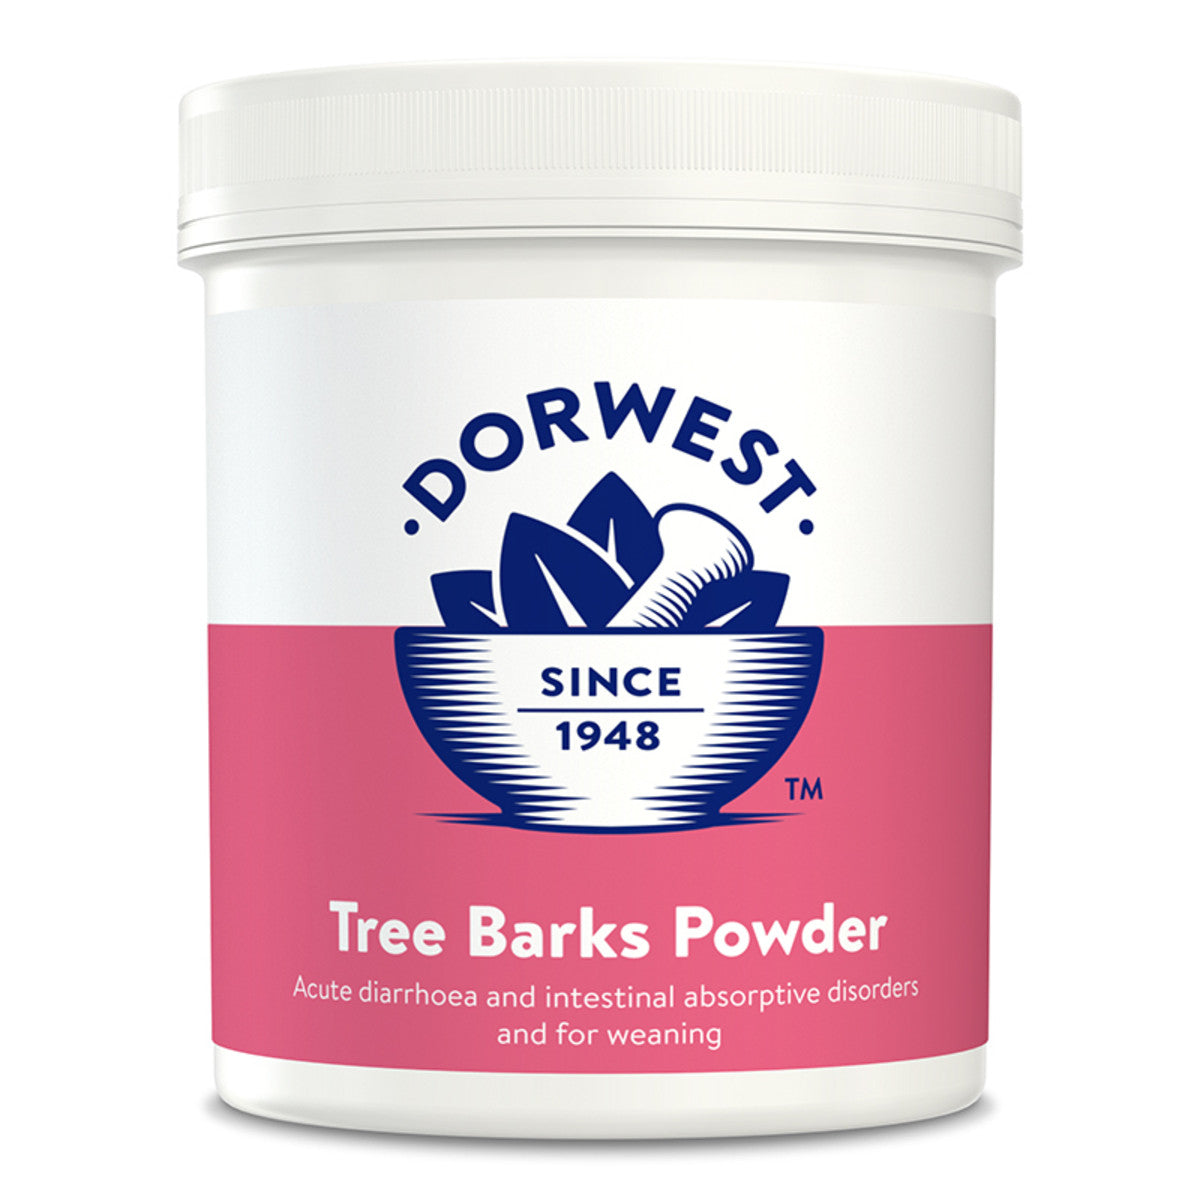 Dorwest Tree Barks Powder 400g